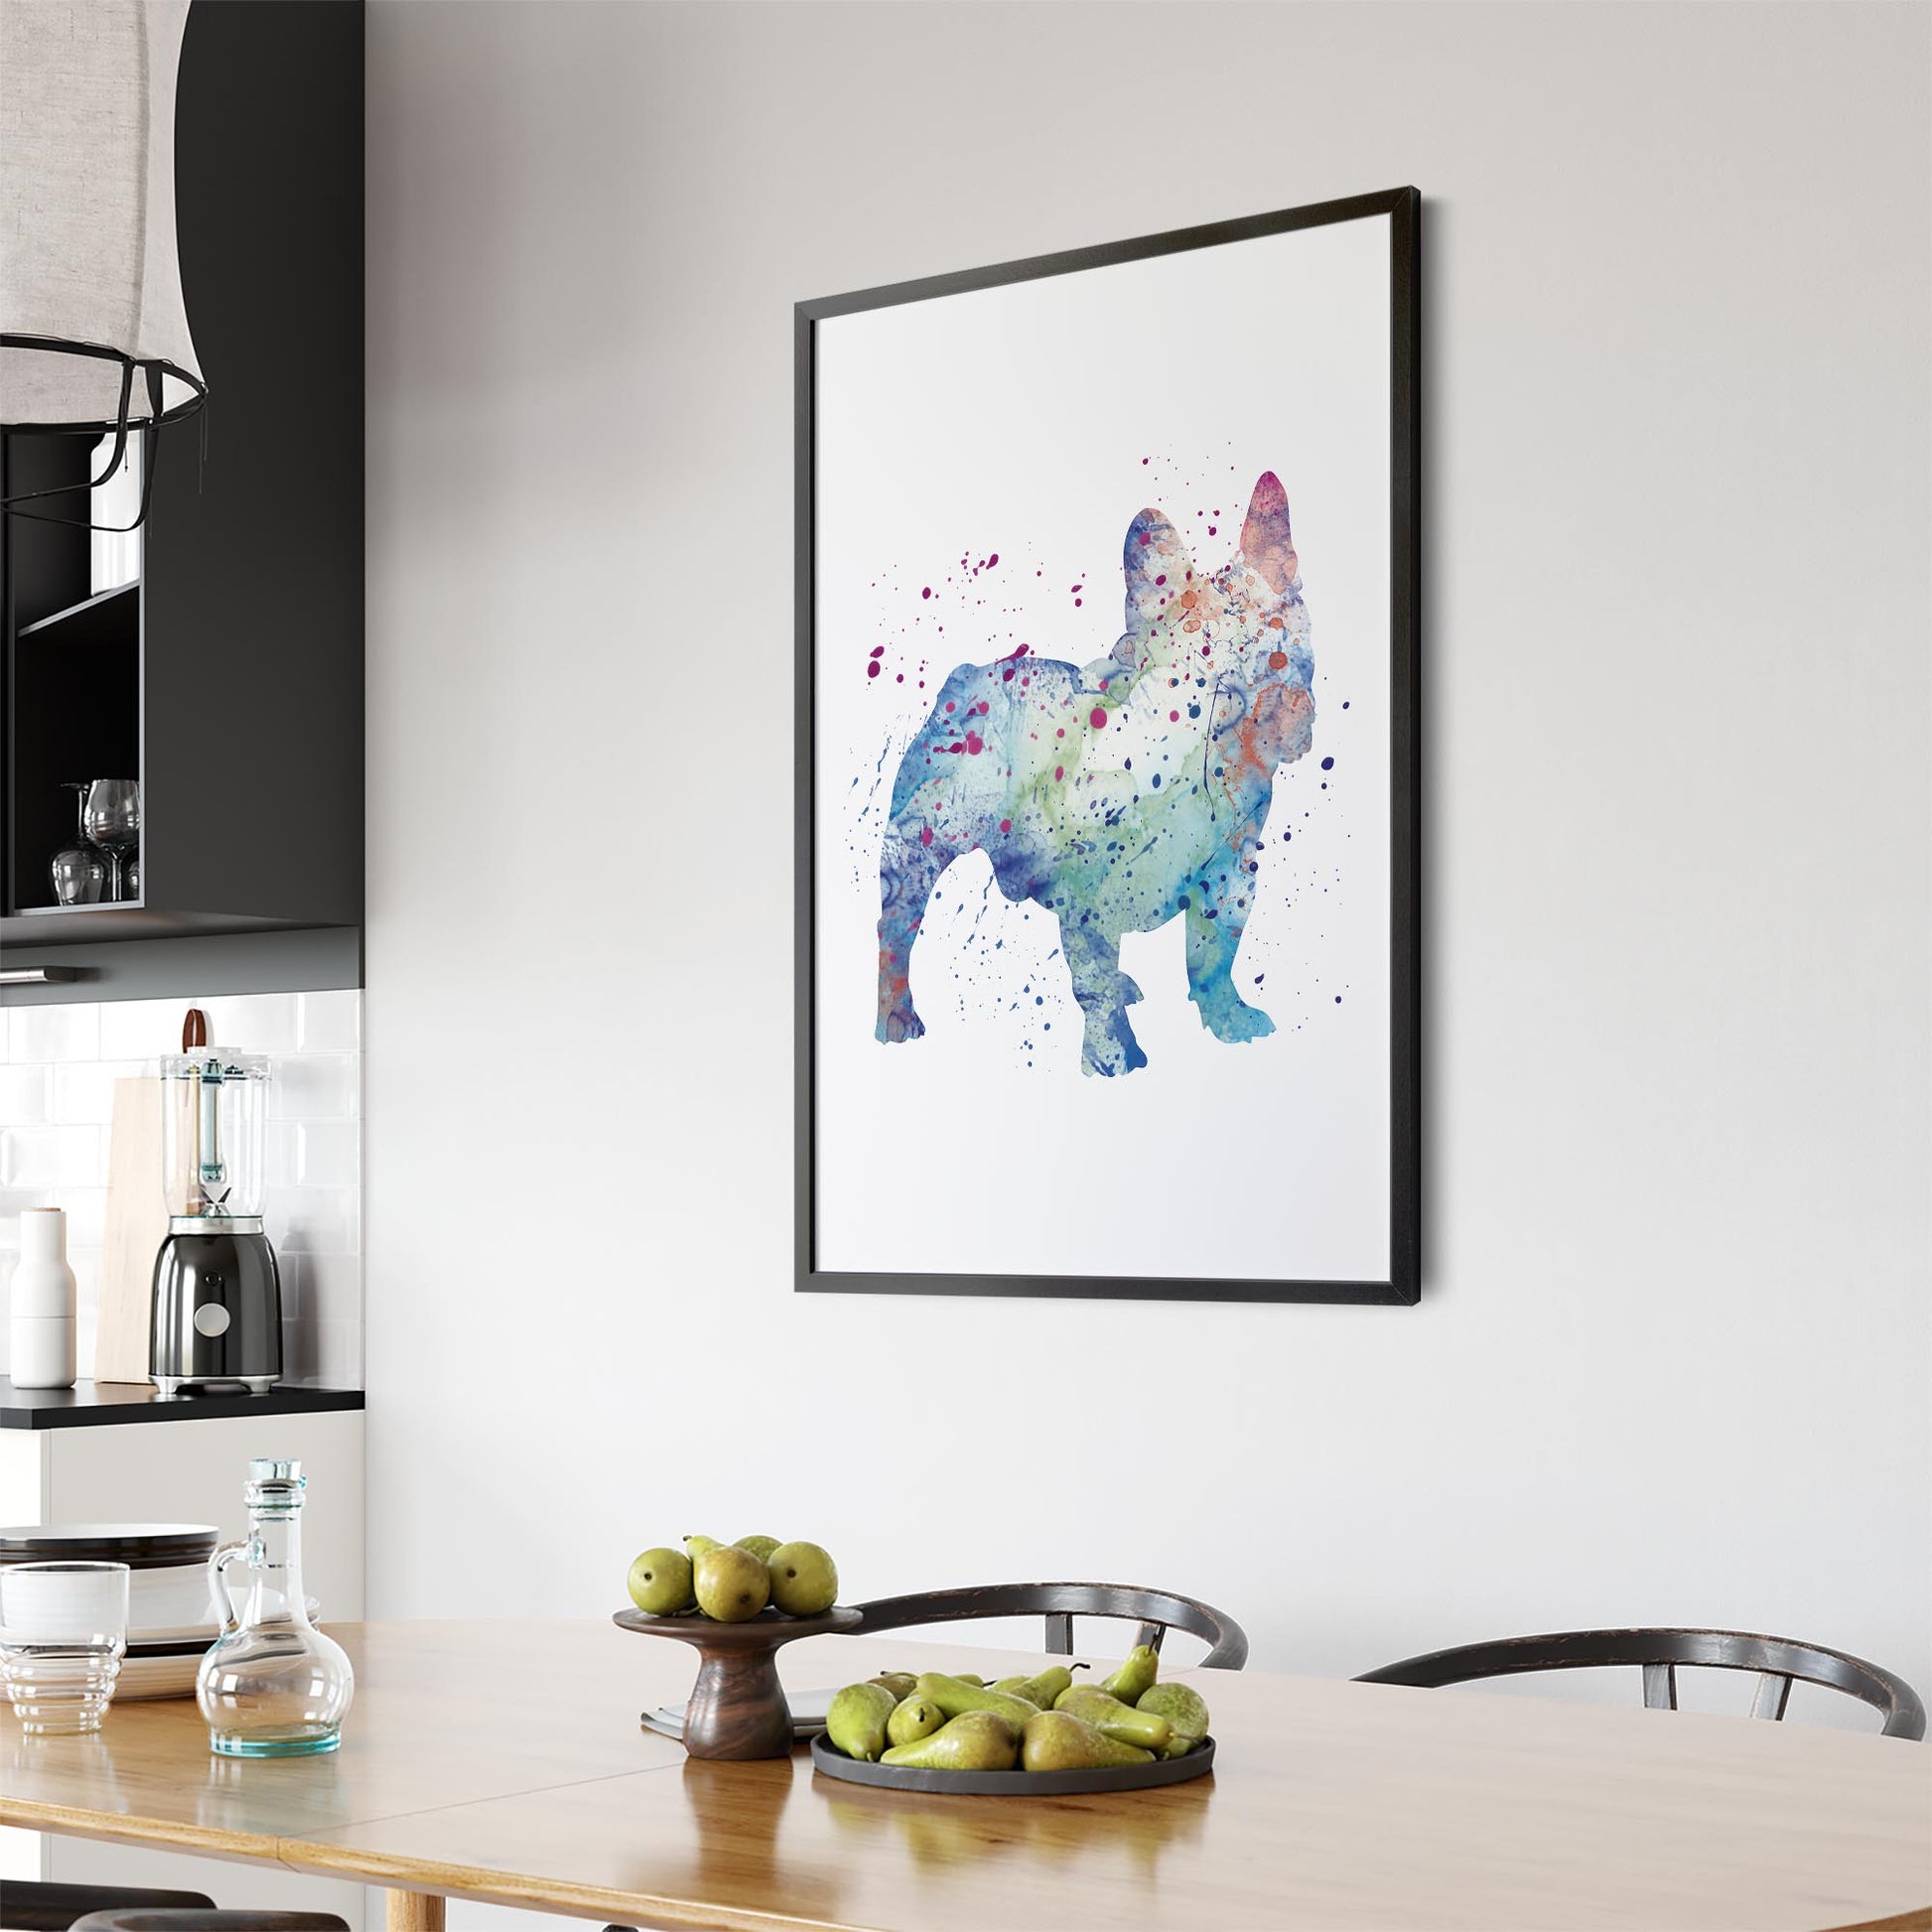 French Bulldog Painting Wall Art Print - The Affordable Art Company